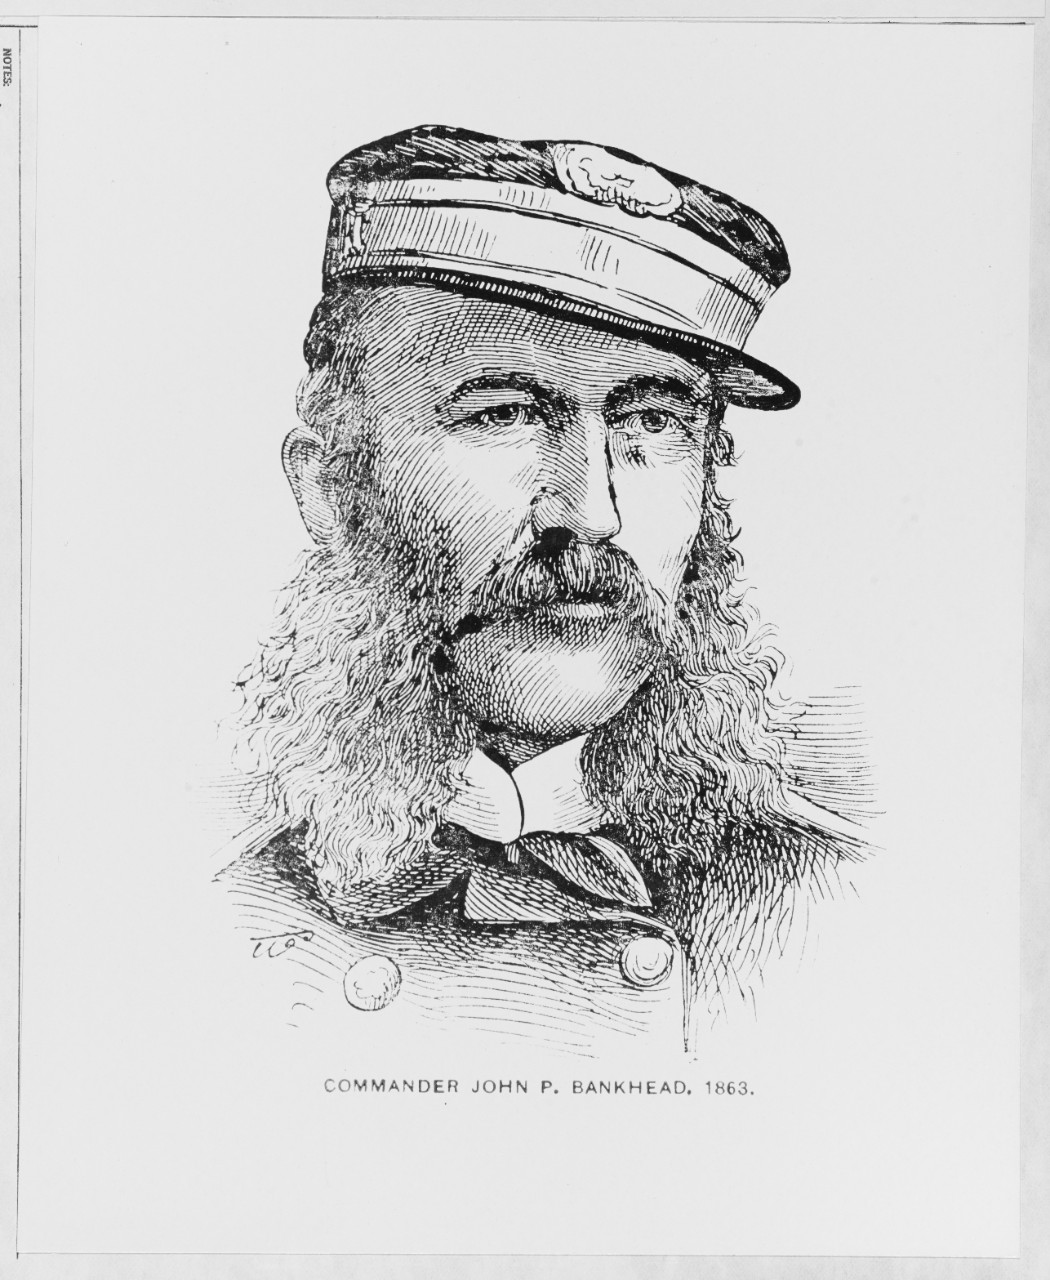 Commander John P. Bankhead, USN